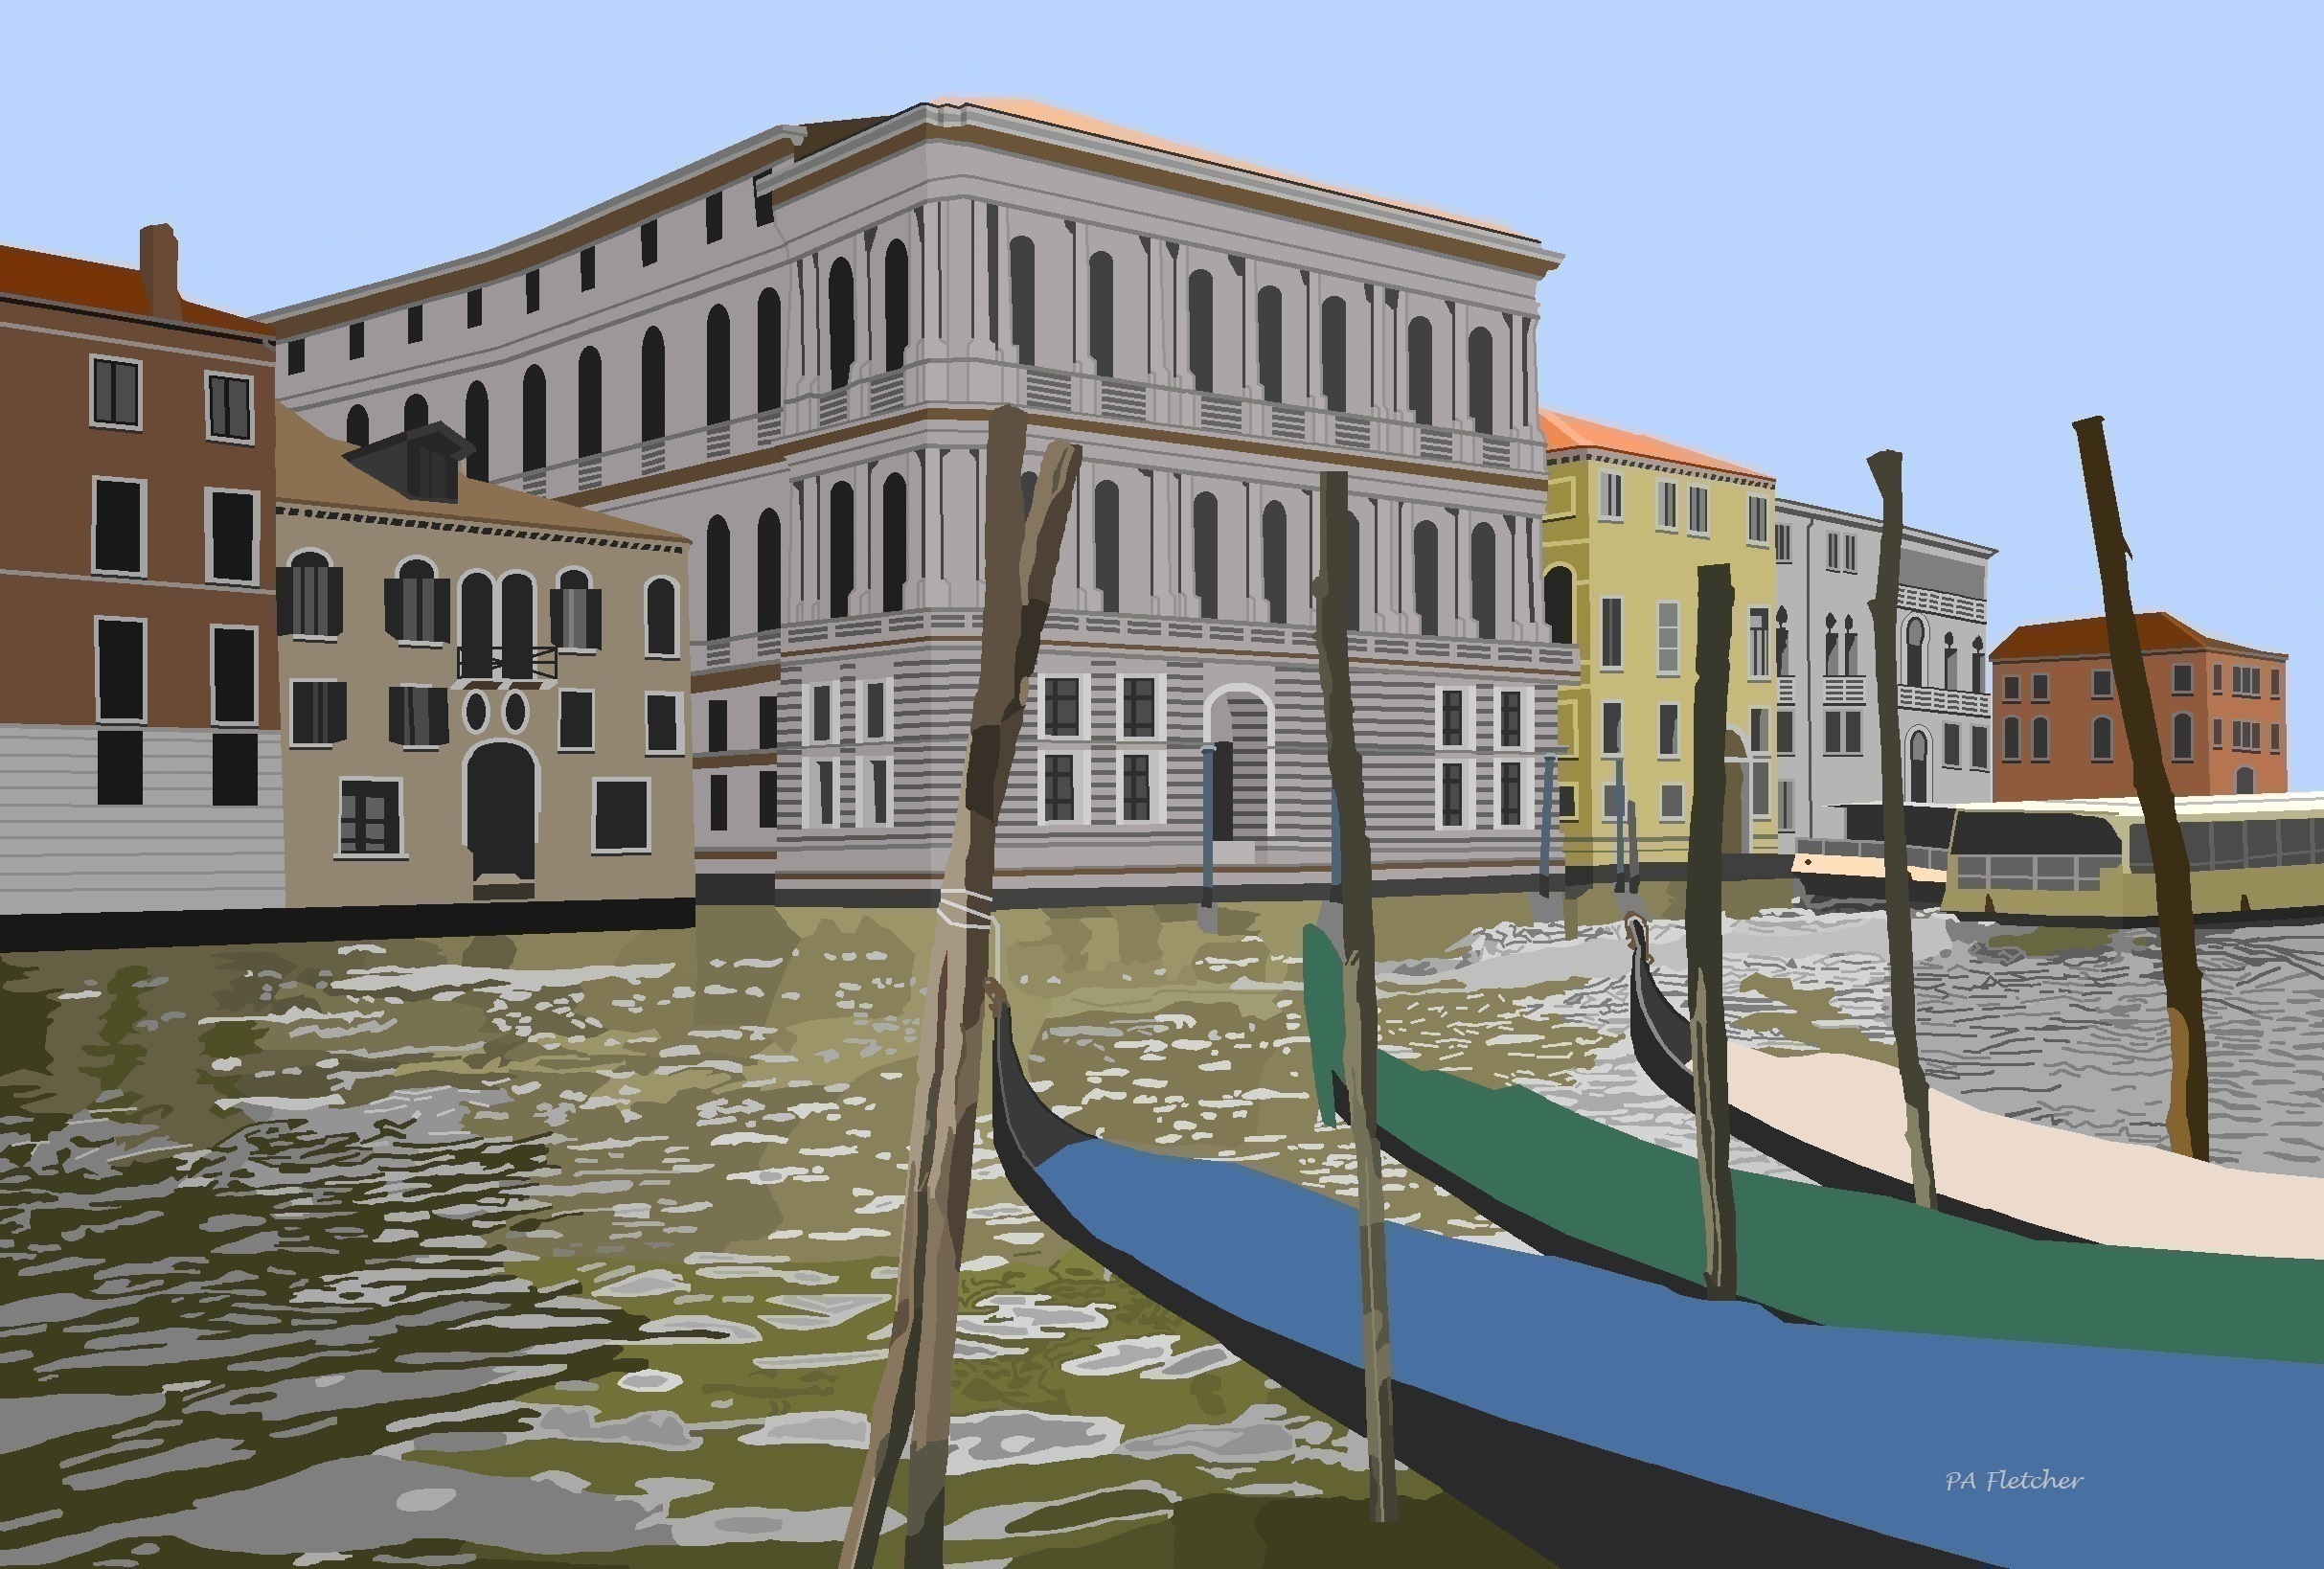 Traffico Idrico Su Un Canale Di Venezia  by Pam Fletcher (painting as P.A. Fletcher) | Lethbridge 20000 2021 Finalists | Lethbridge Gallery